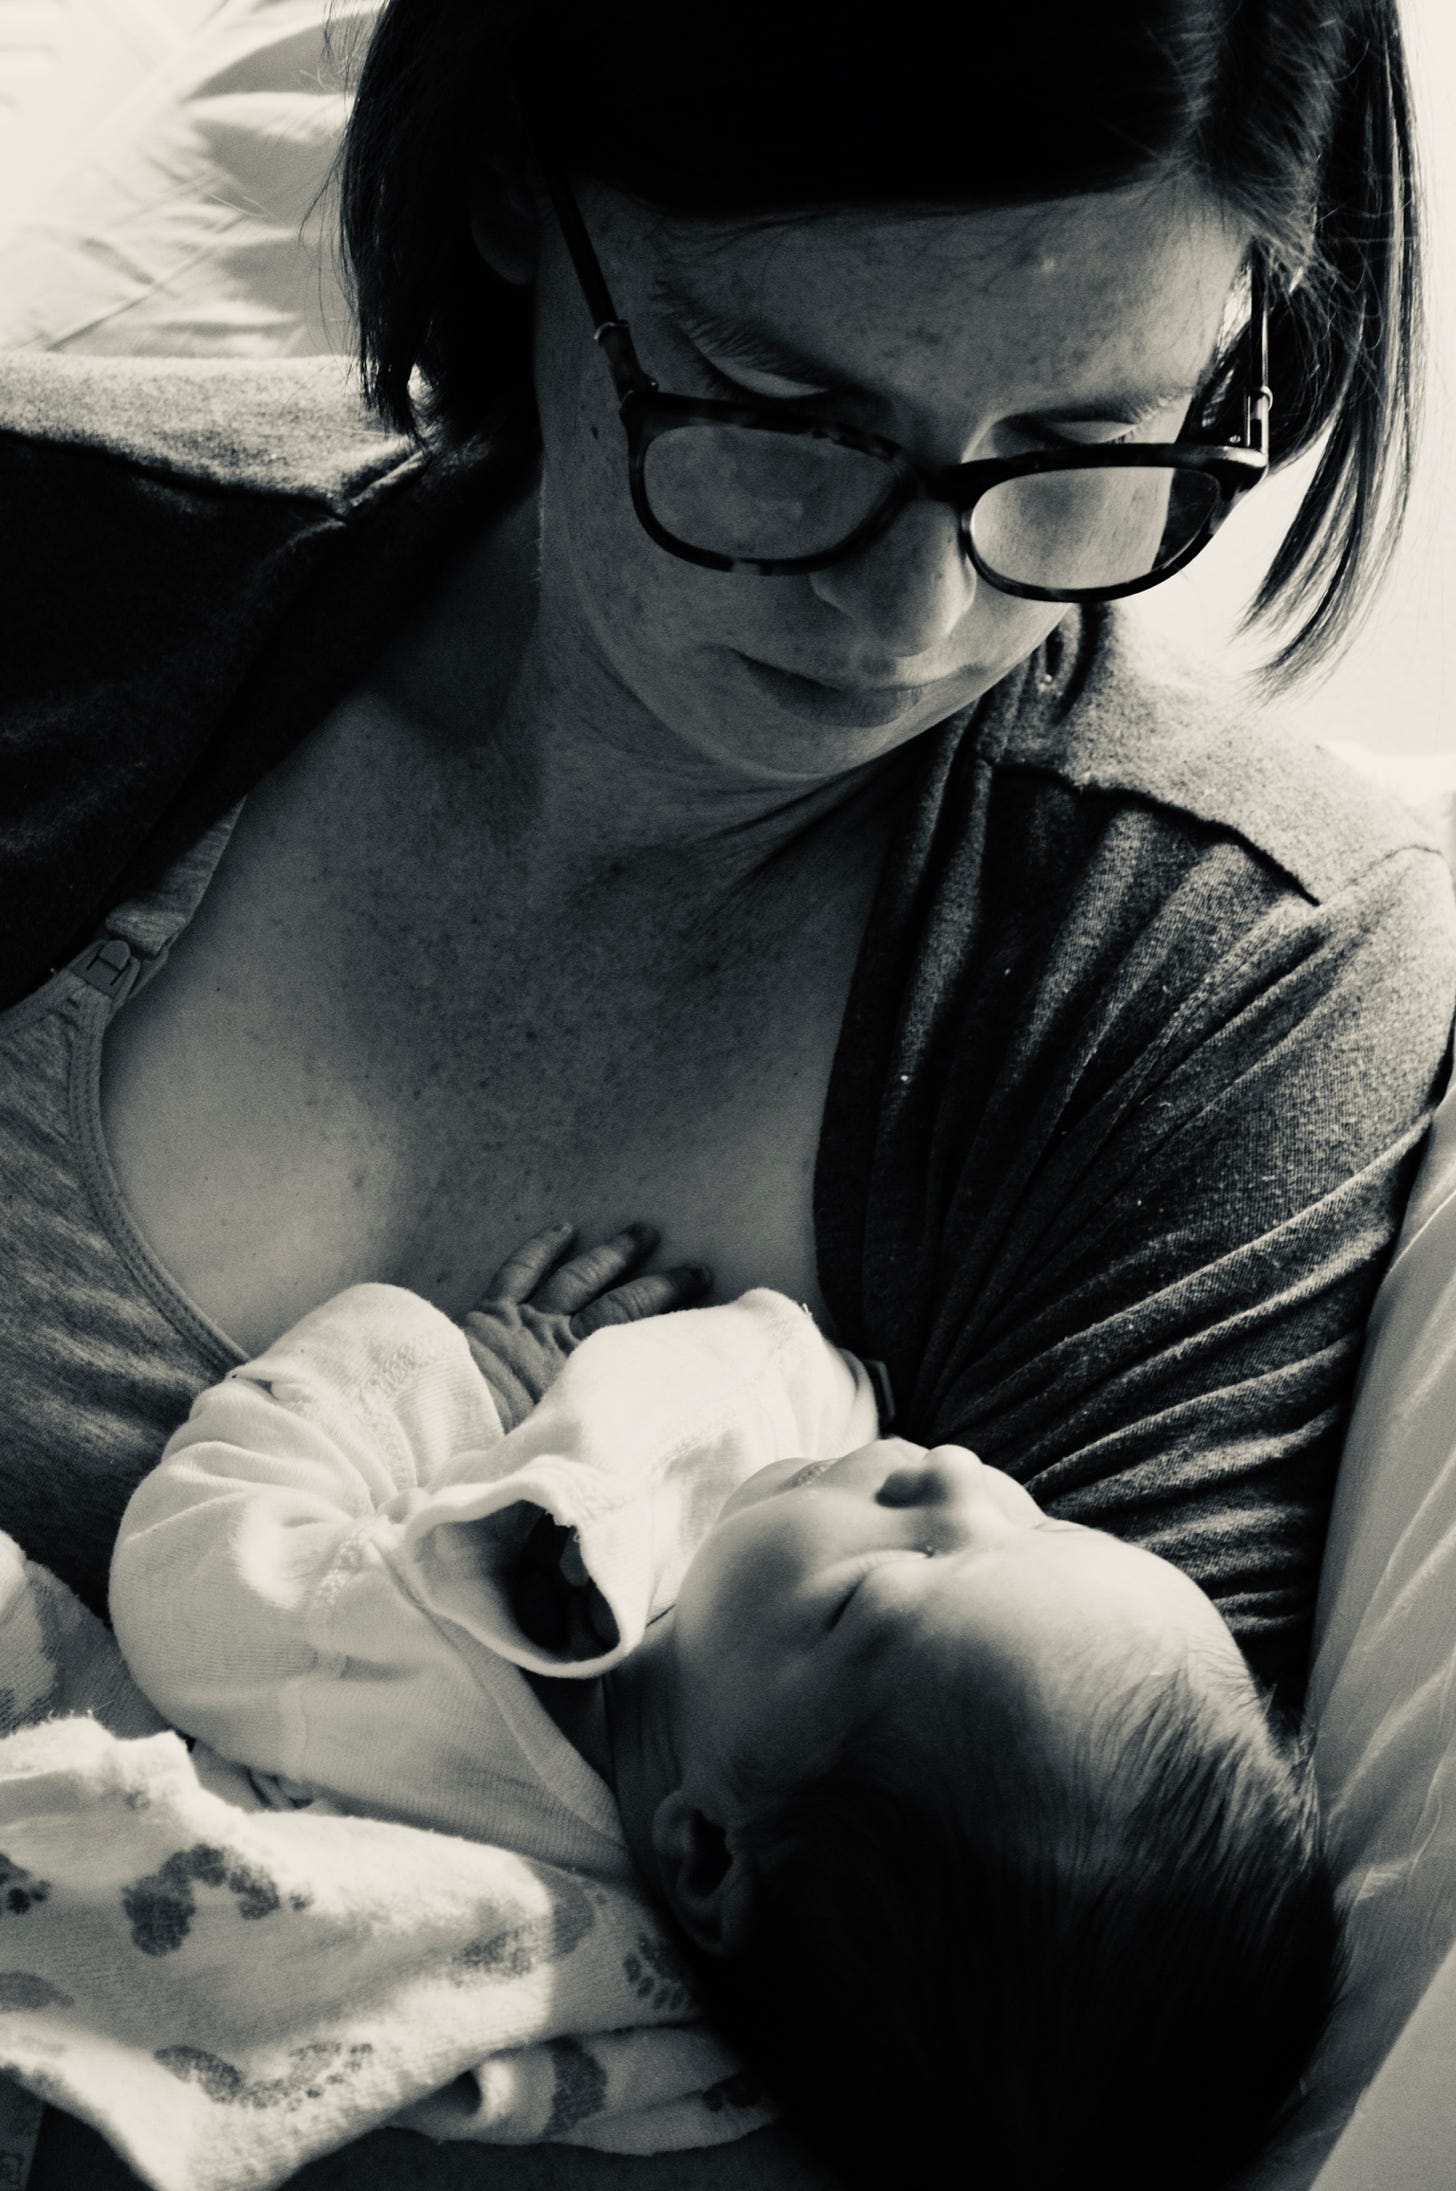 woman wearing glasses holding newborn